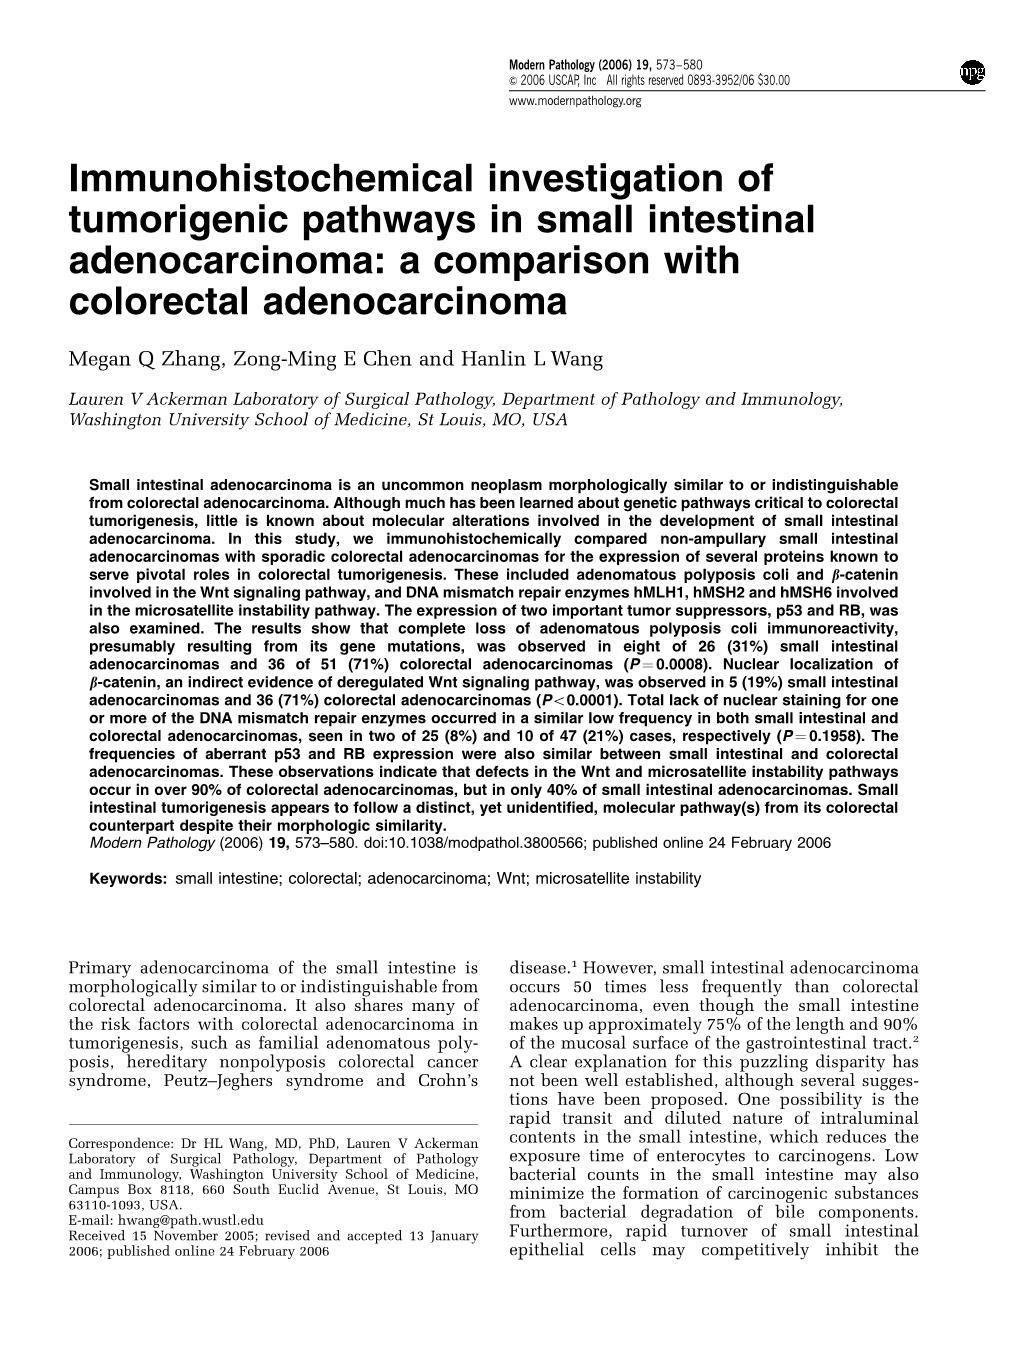 Immunohistochemical Investigation of Tumorigenic Pathways in Small Intestinal Adenocarcinoma: a Comparison with Colorectal Adenocarcinoma